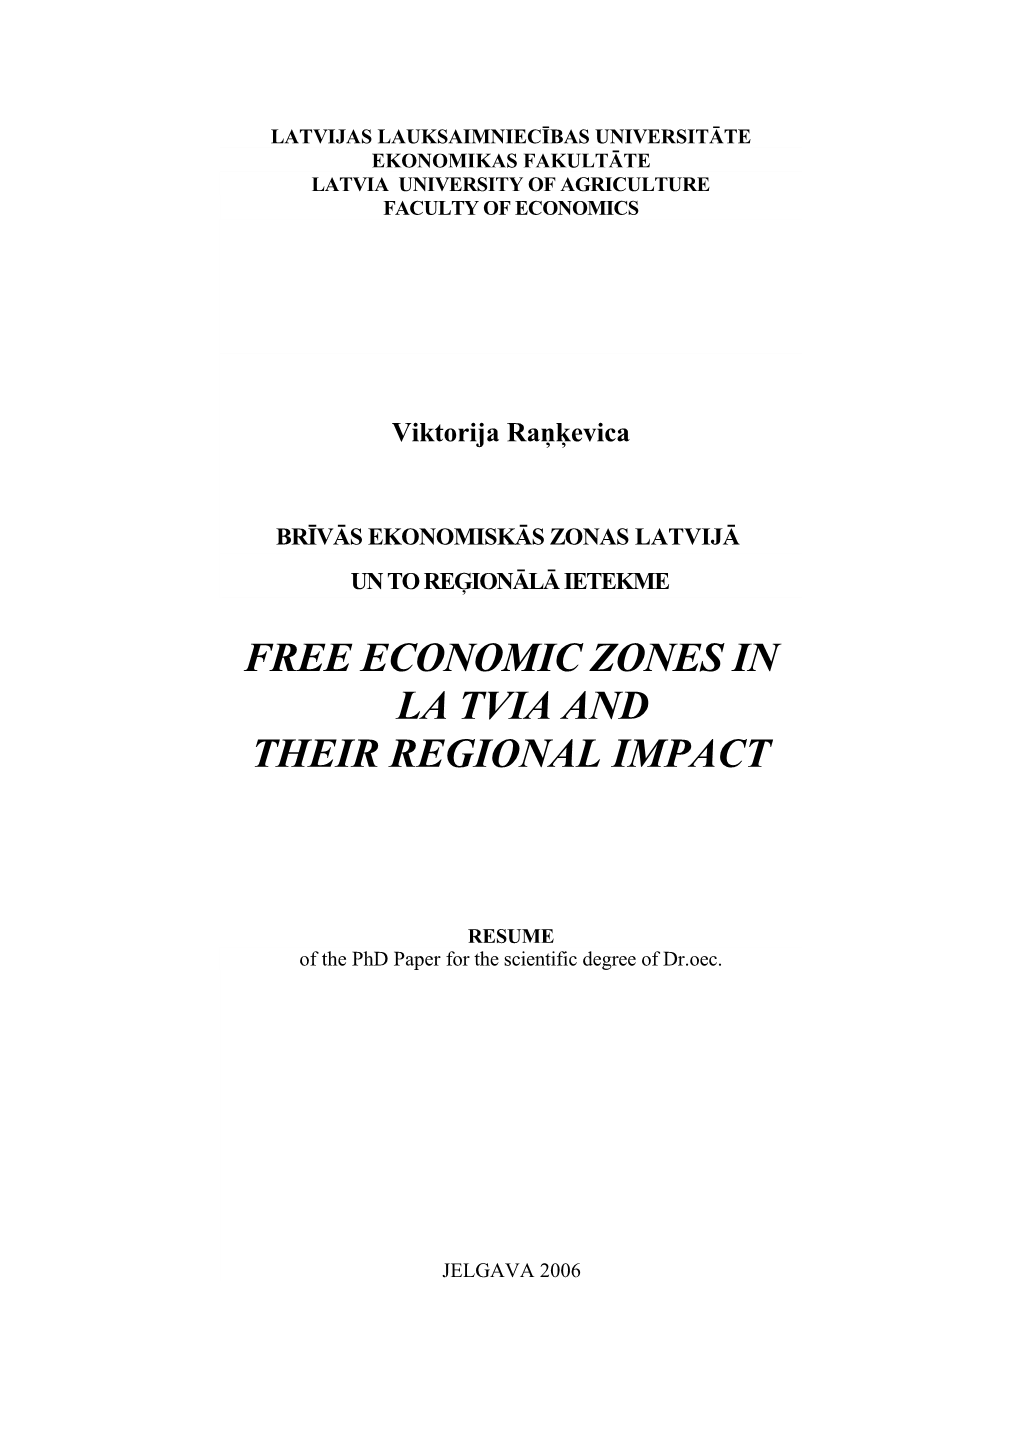 Viktorija Raņķevica. Free Economic Zones in Latvia and Their Regional Impact. Phd Papers